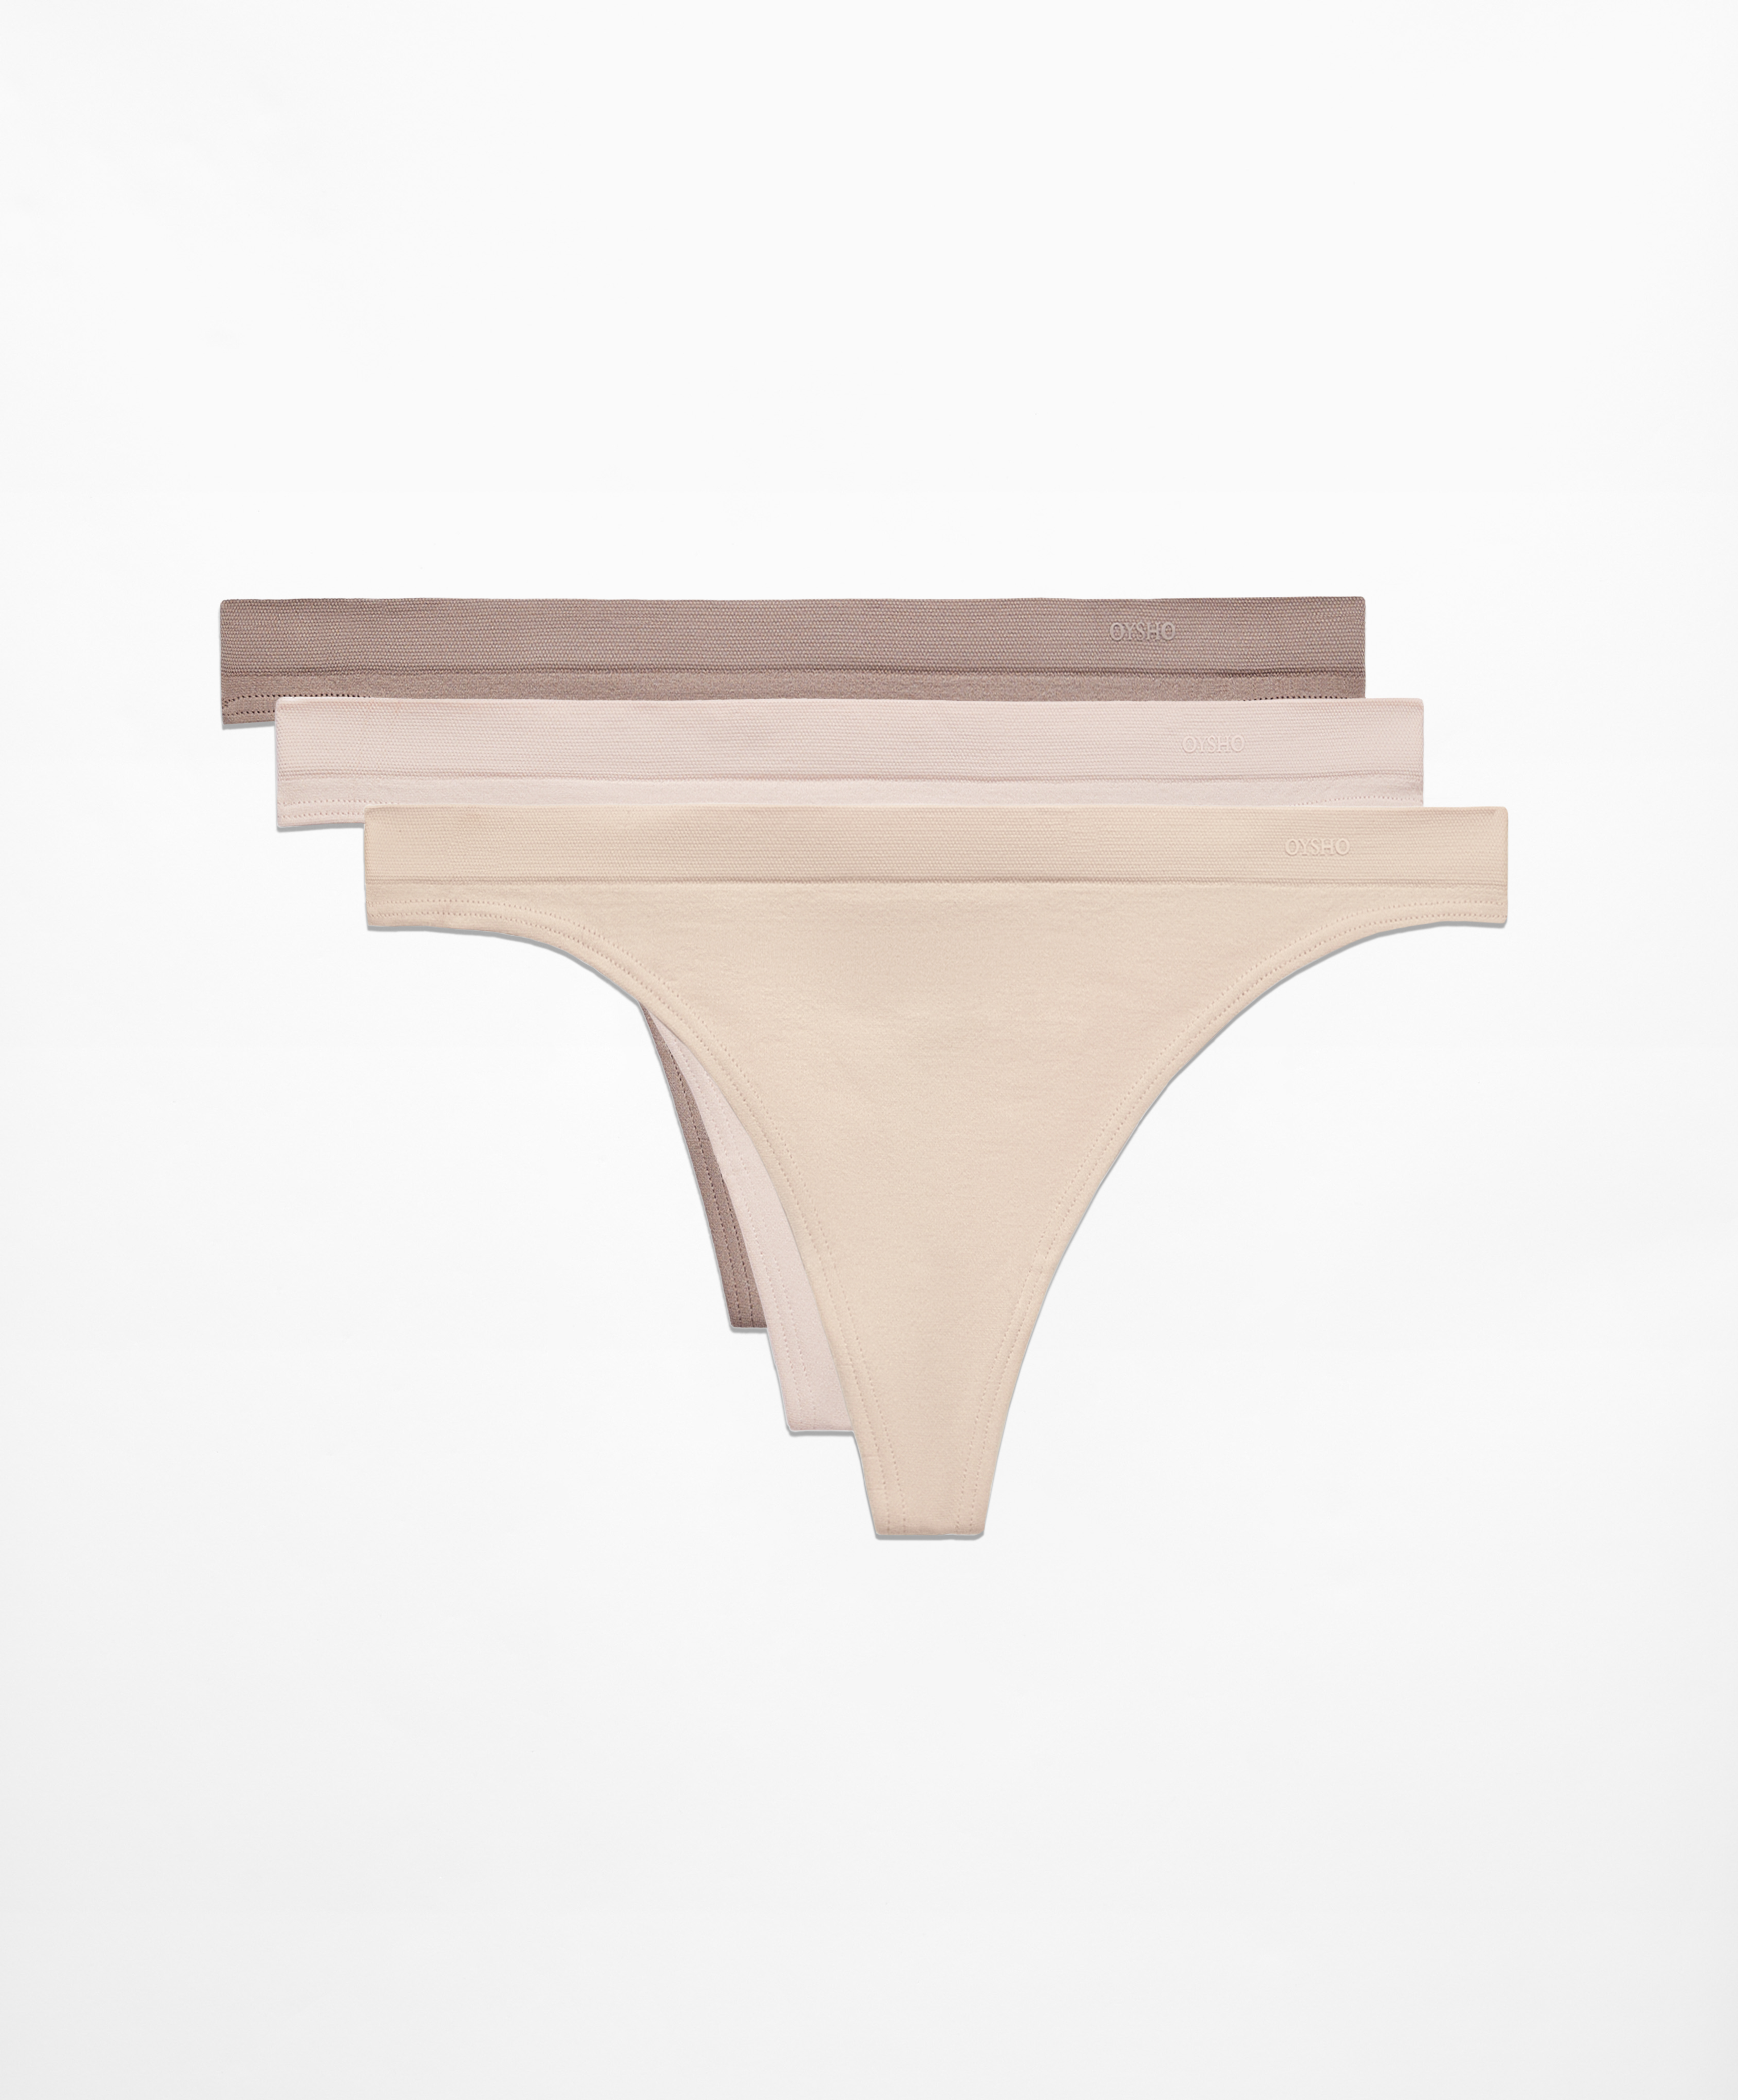 The Analysis of Oysho The Women's Benchmark Underwear & Loungewear